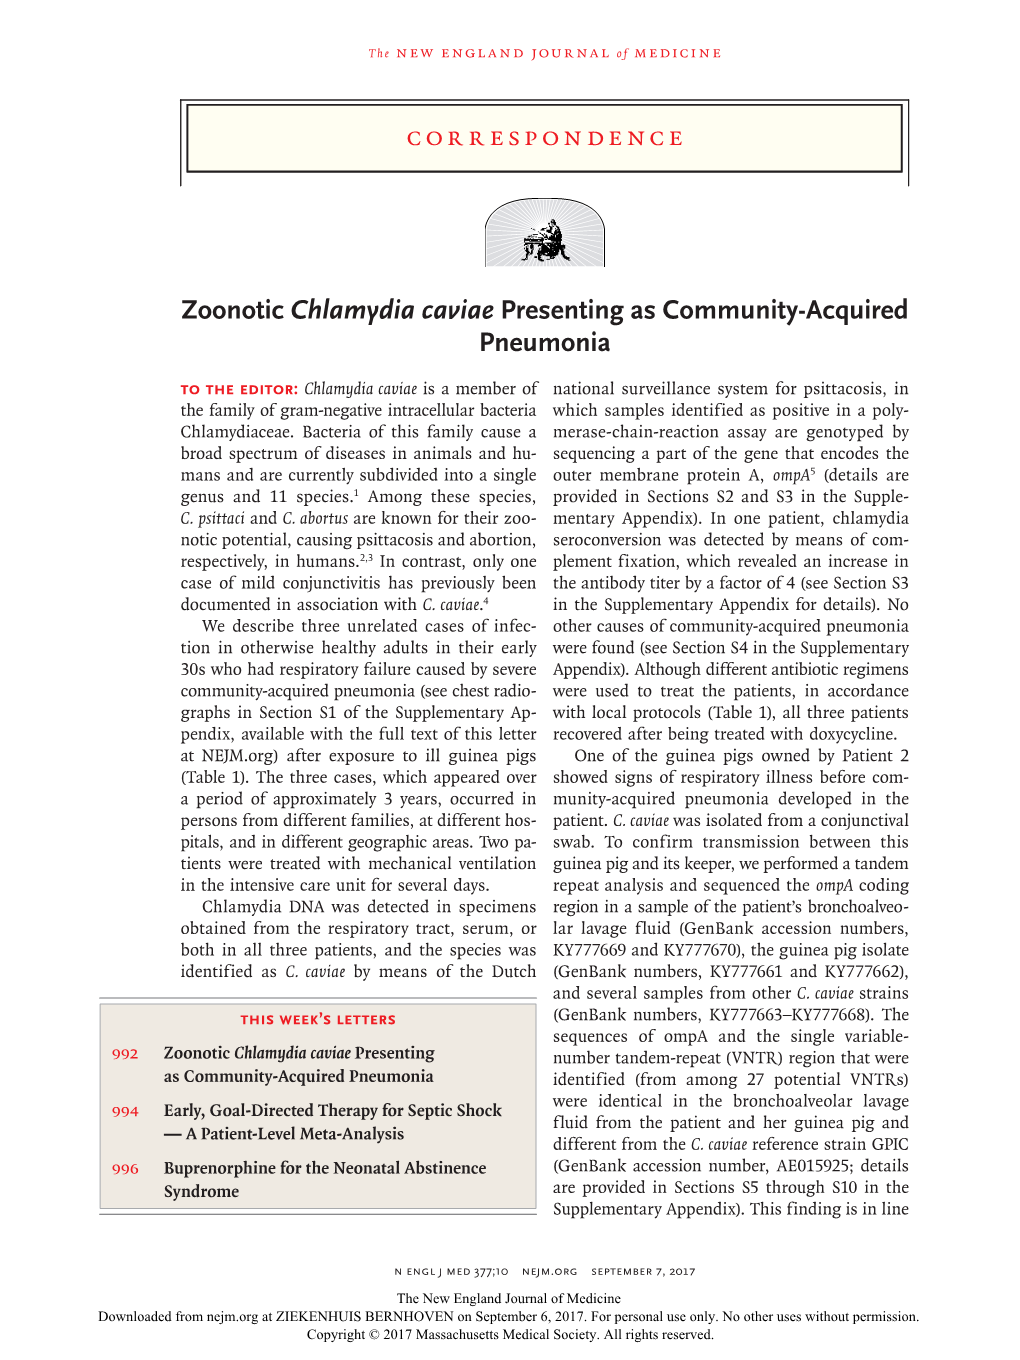 Zoonotic Chlamydia Caviae Presenting As Community-Acquired Pneumonia